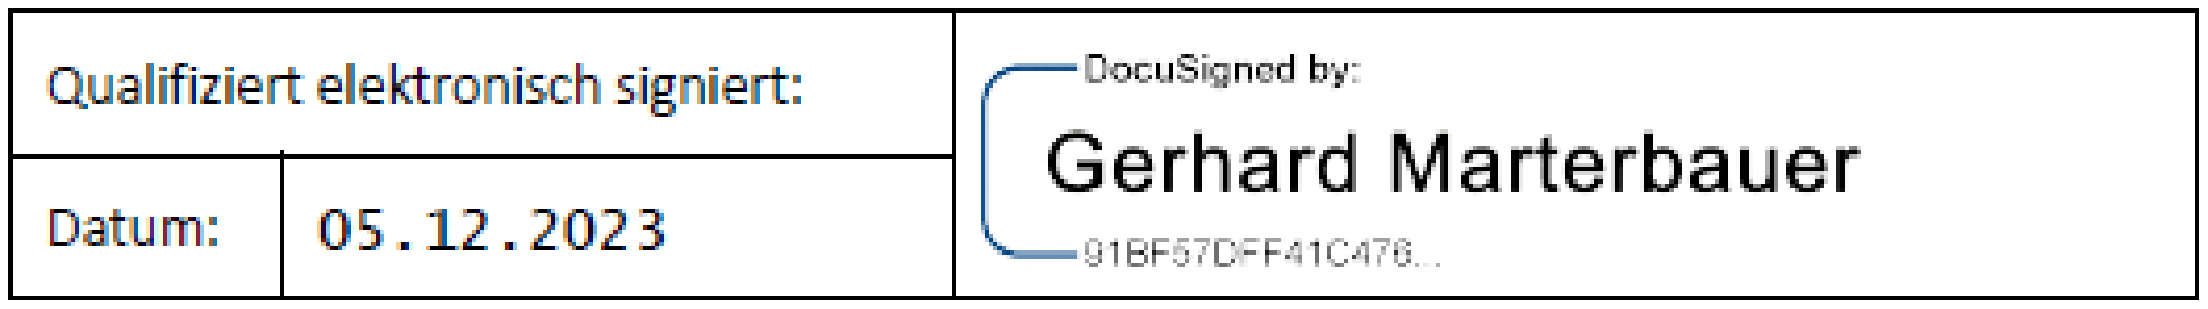 Mag. Gerhard Marterbauer, Auditor (signature)